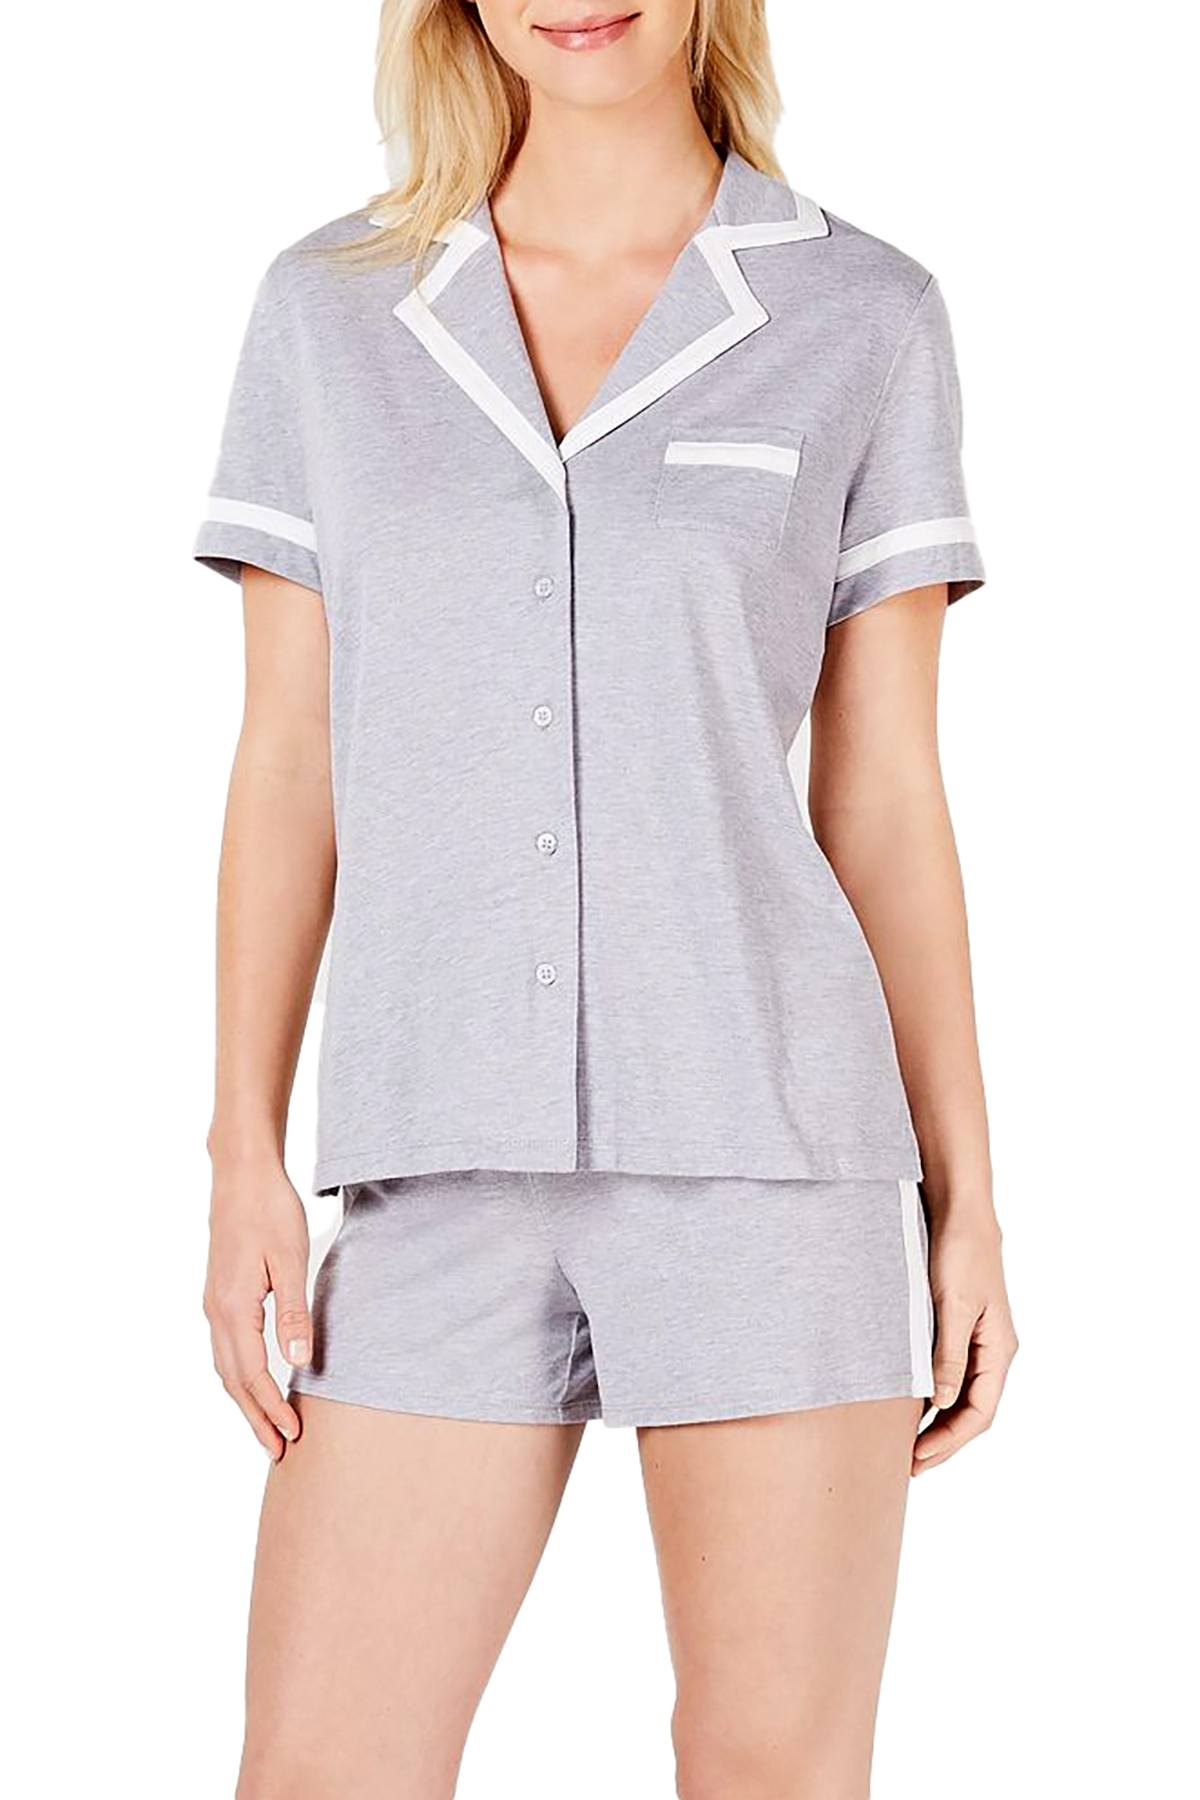 Alfani Pima Cotton Short Sleeve Top / Short Set in Heather Grey